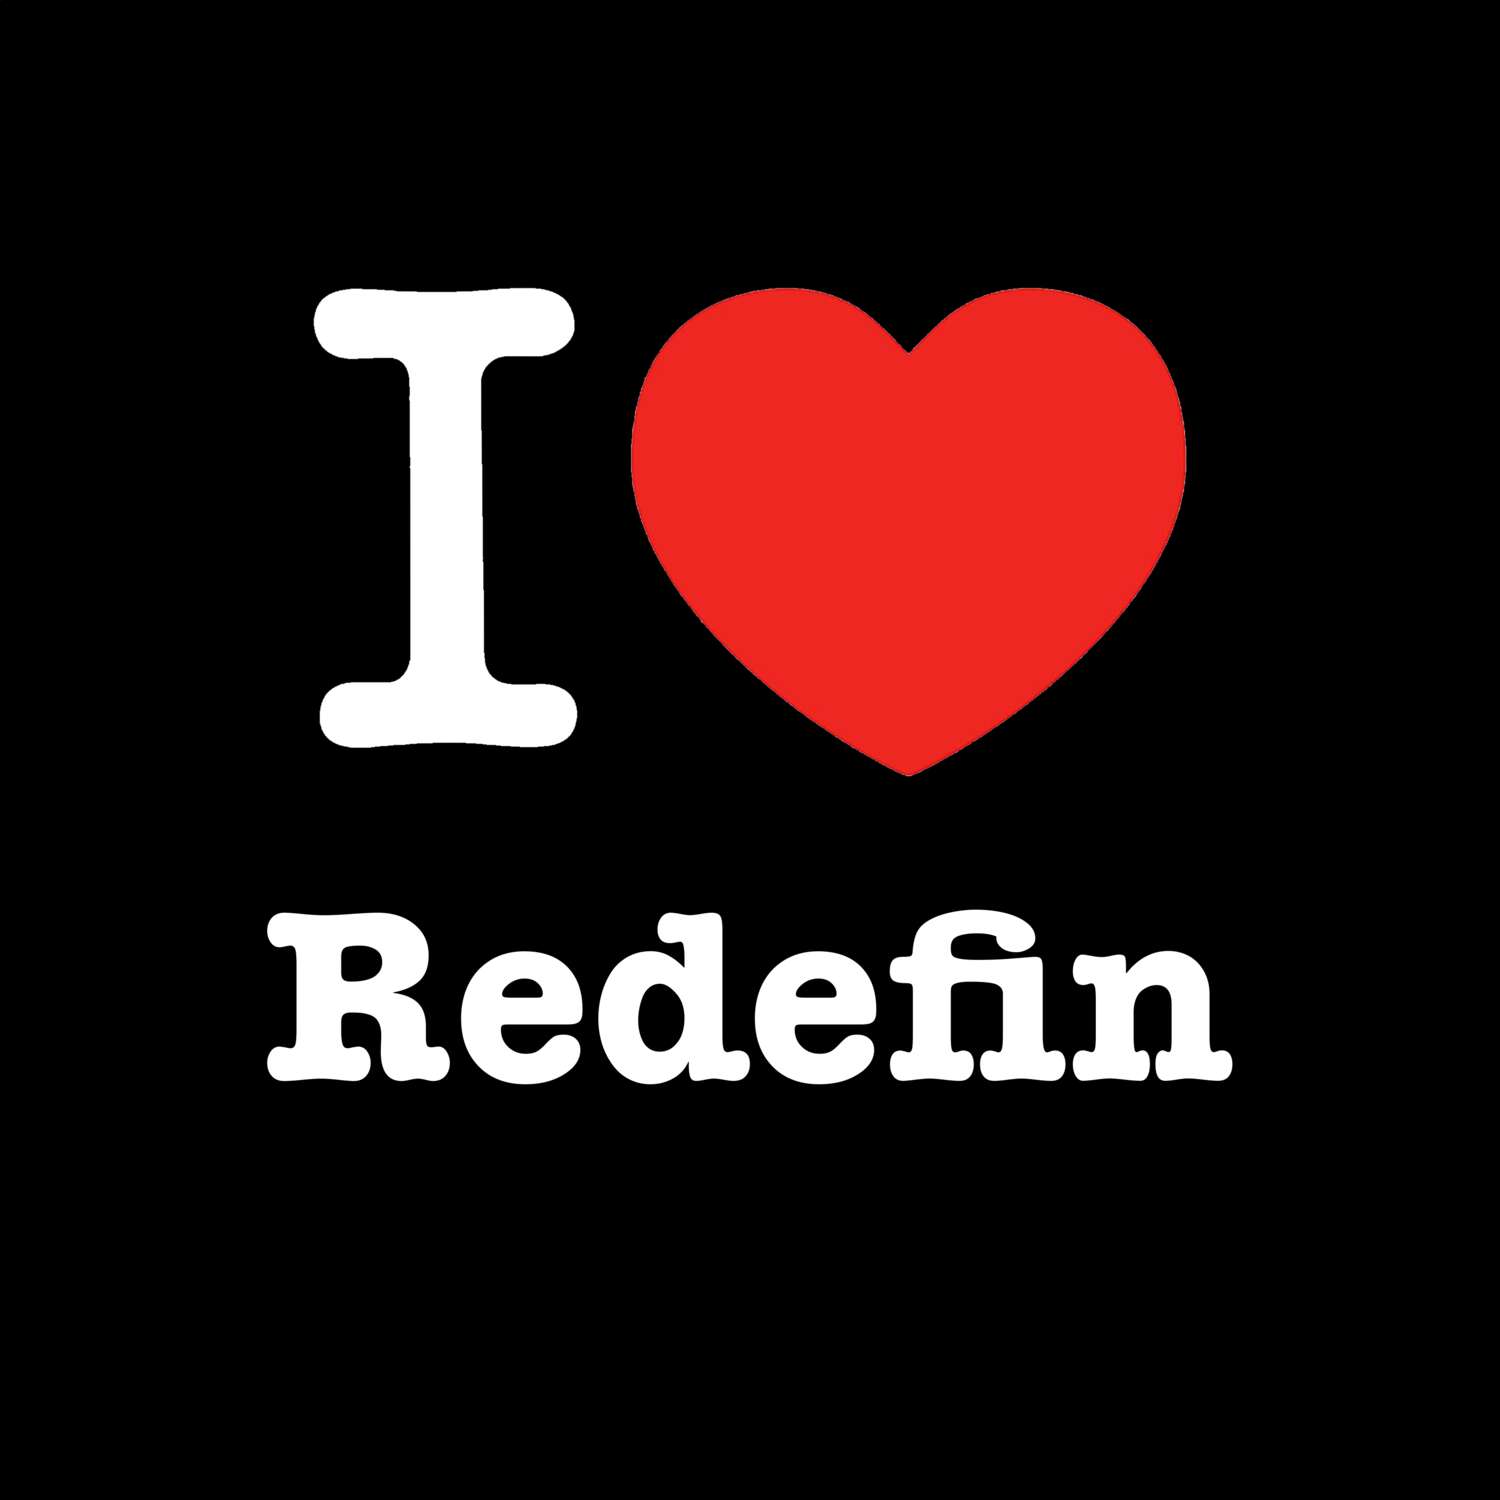 Redefin T-Shirt »I love«